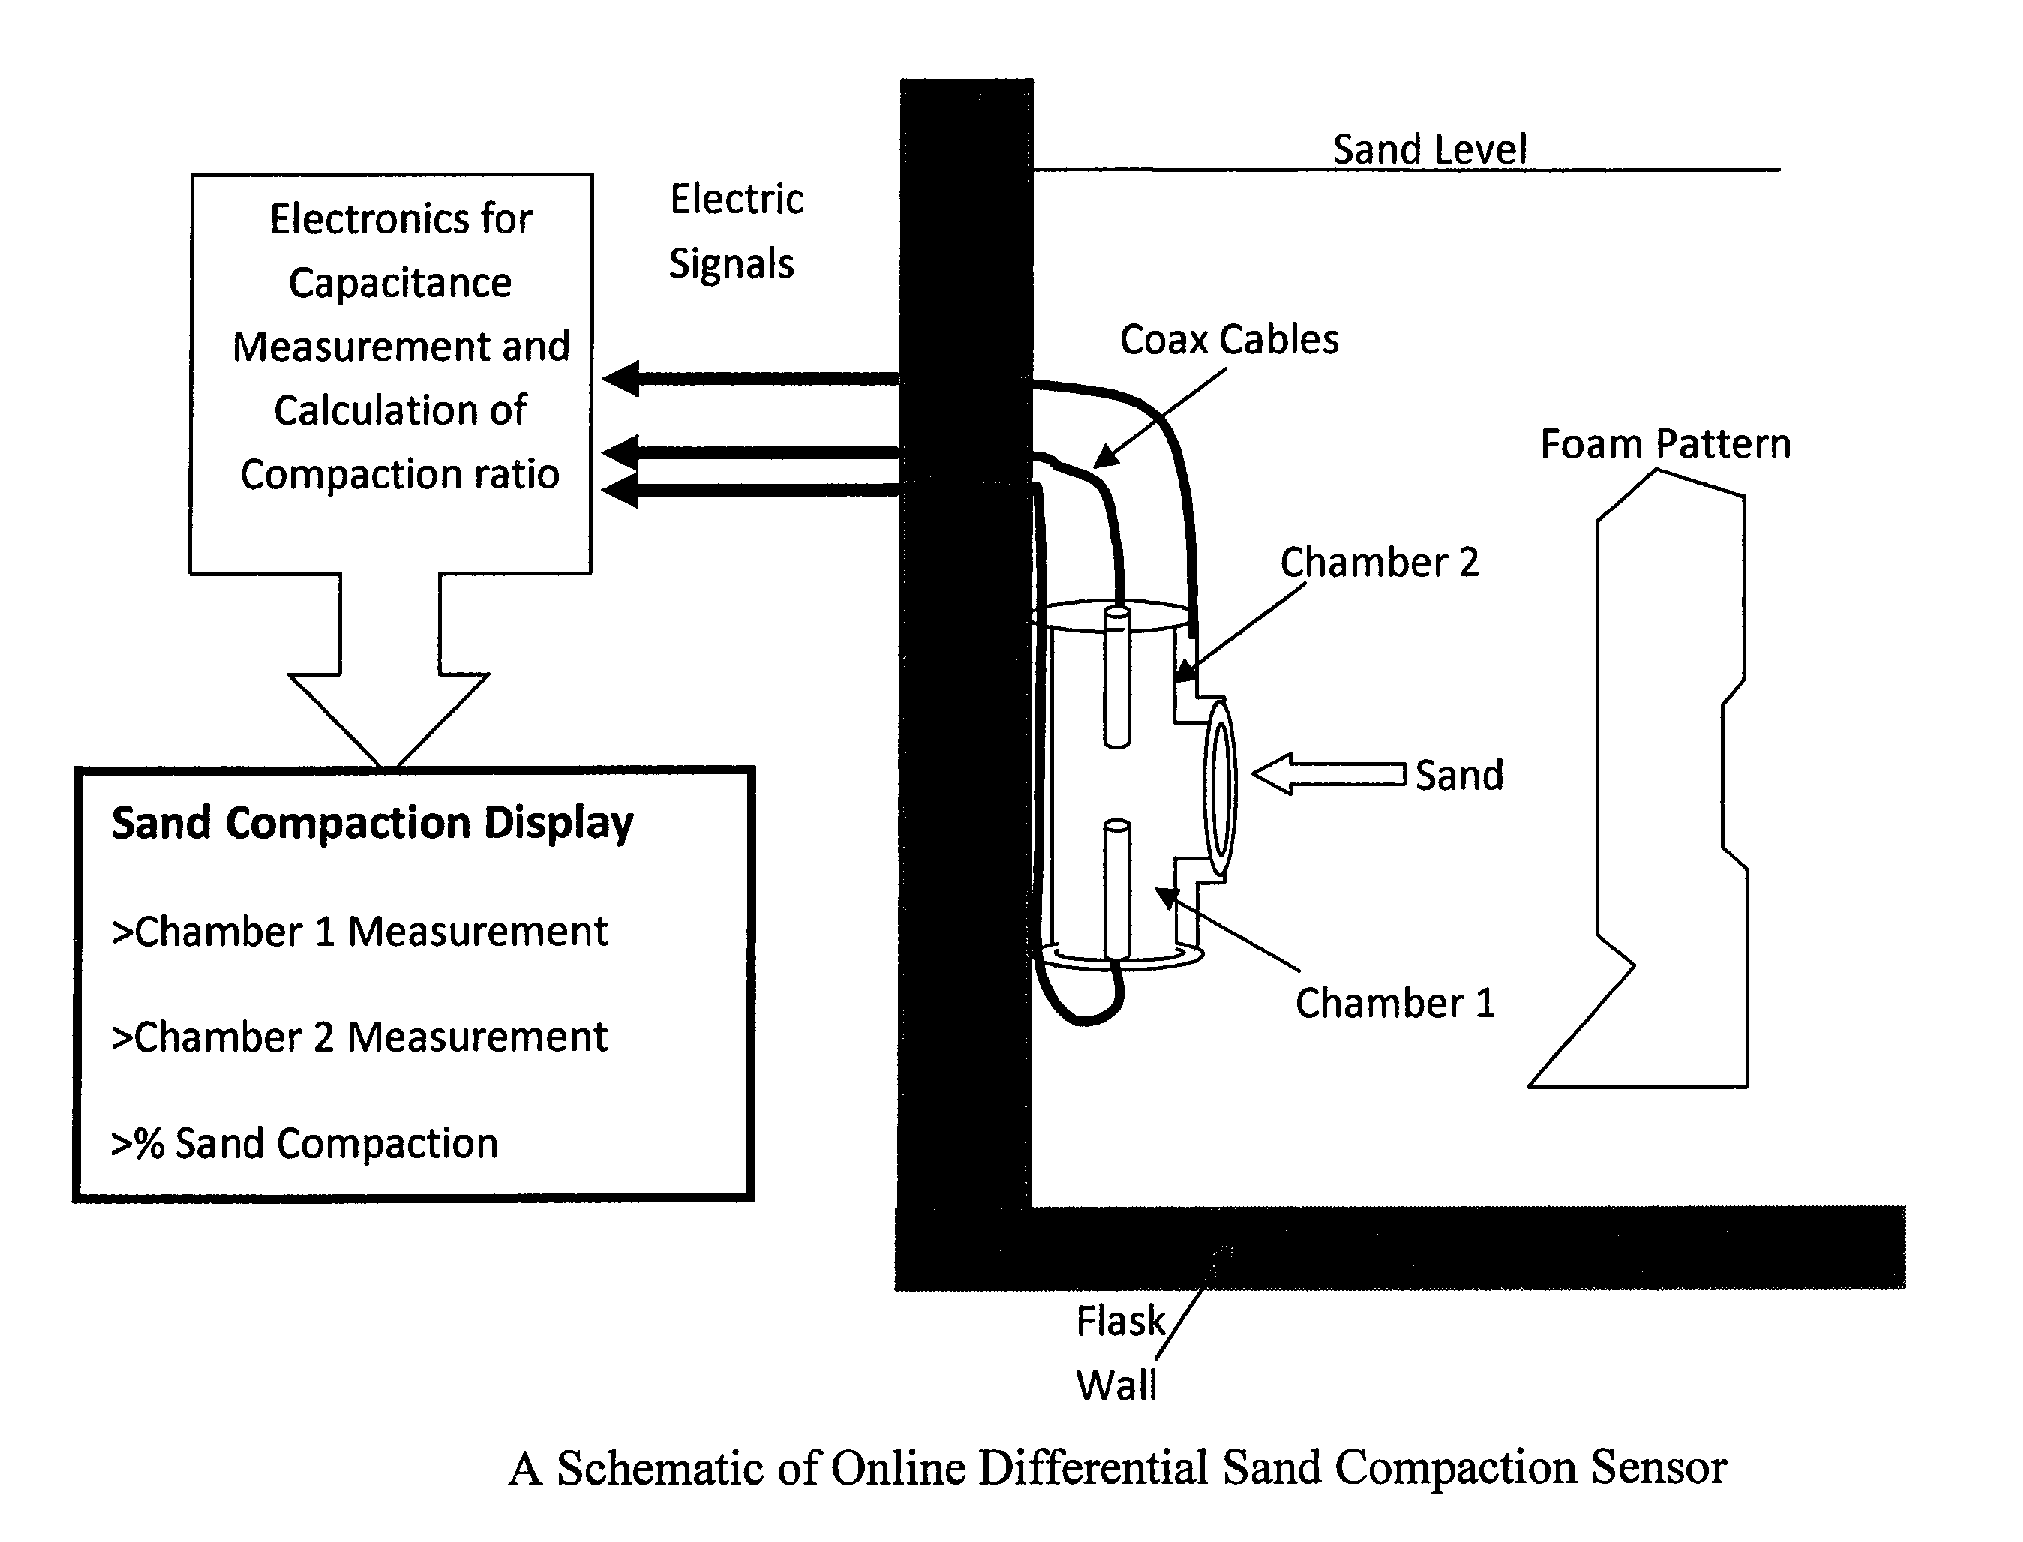 Differential sand compaction sensor